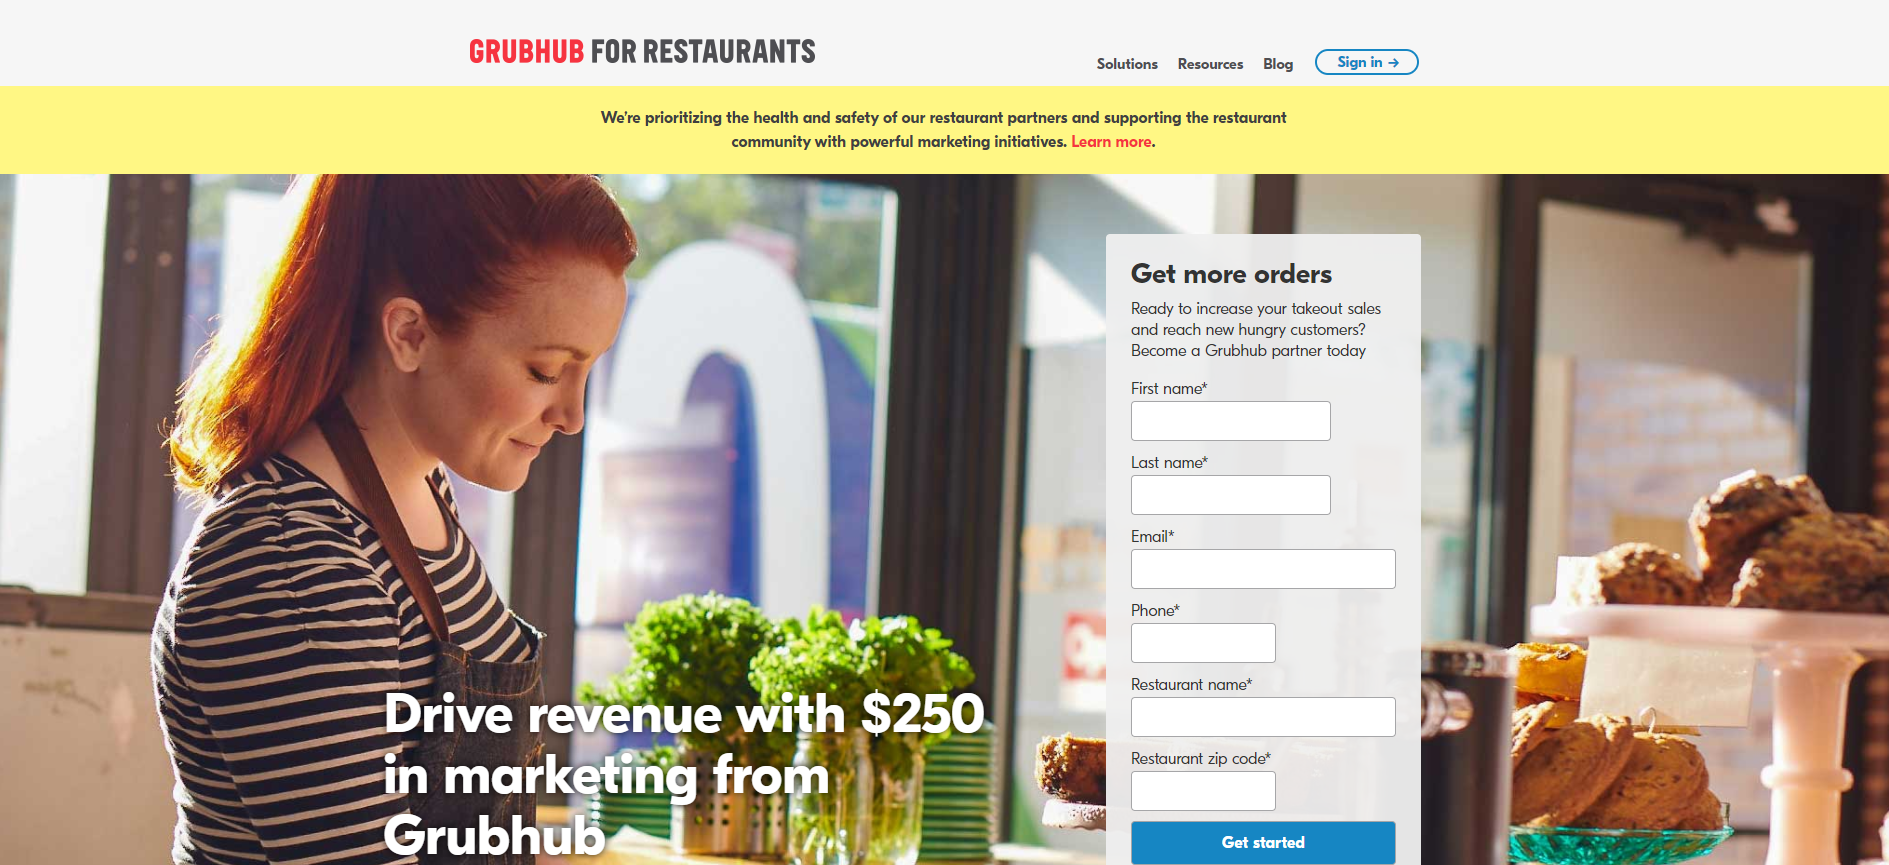 GrubHub For Restaurants homepage